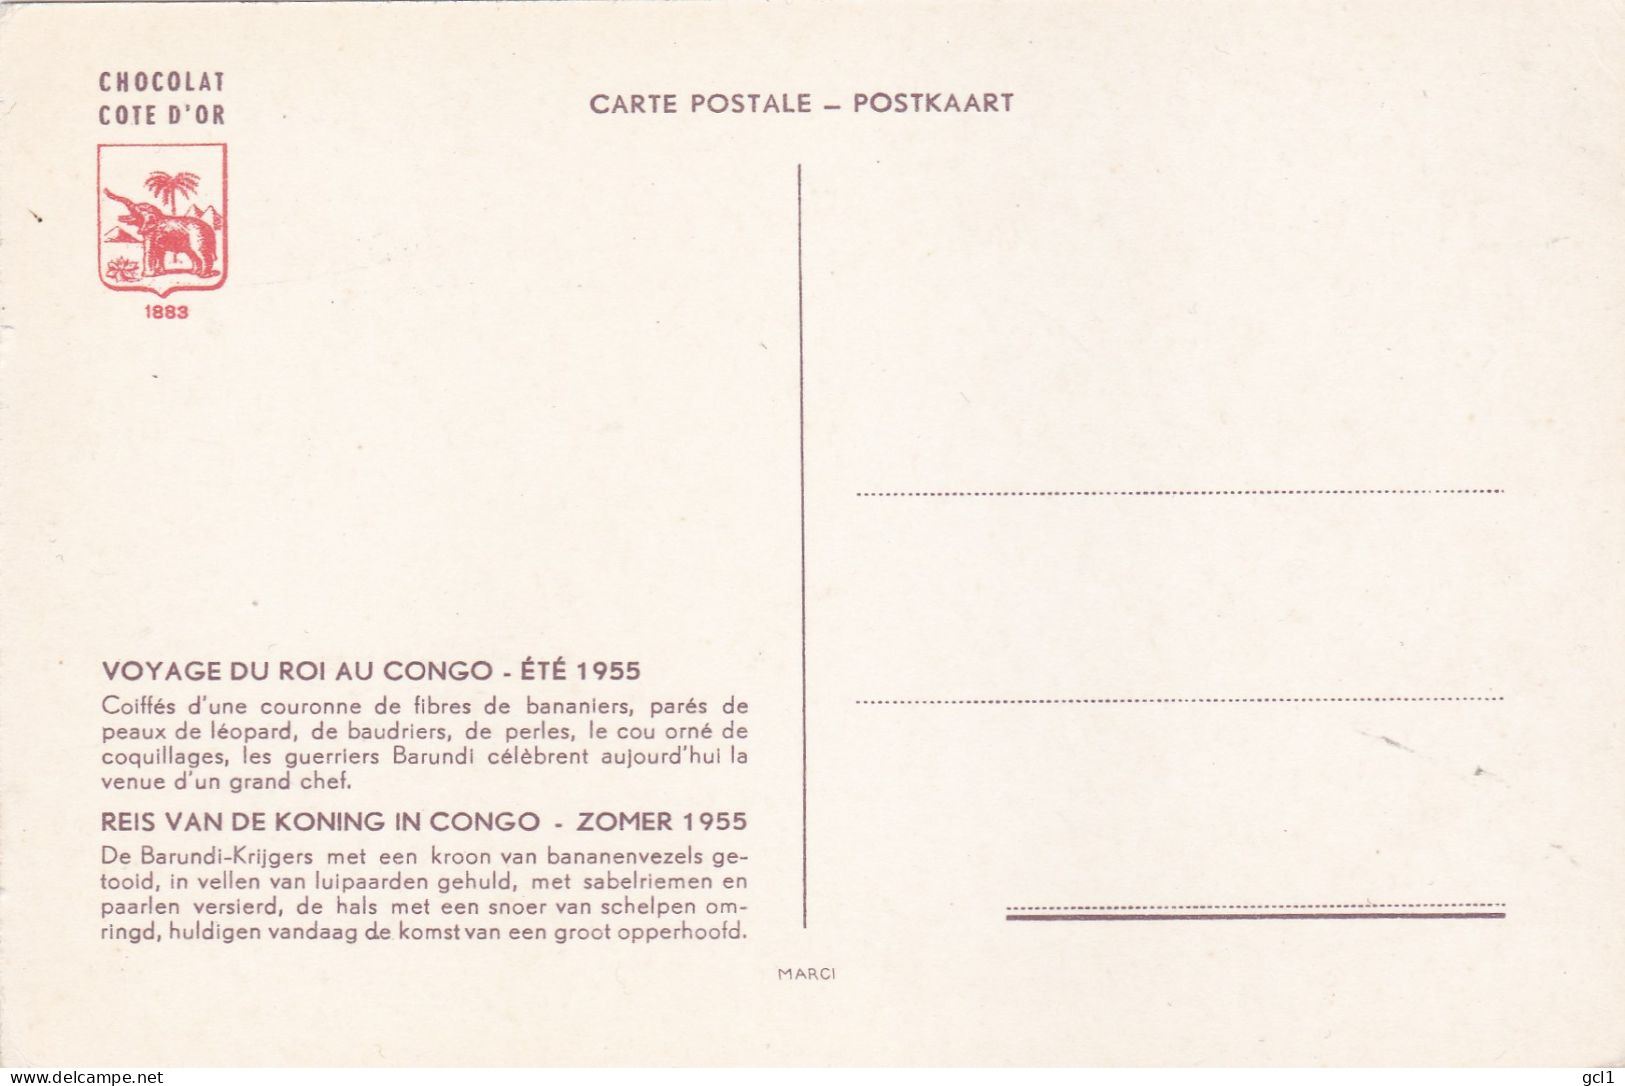 Reis Van De Koning In Congo -Zomer 1955 - 15 Stuks Van Cote D' Or Chocolade - Collezioni E Lotti